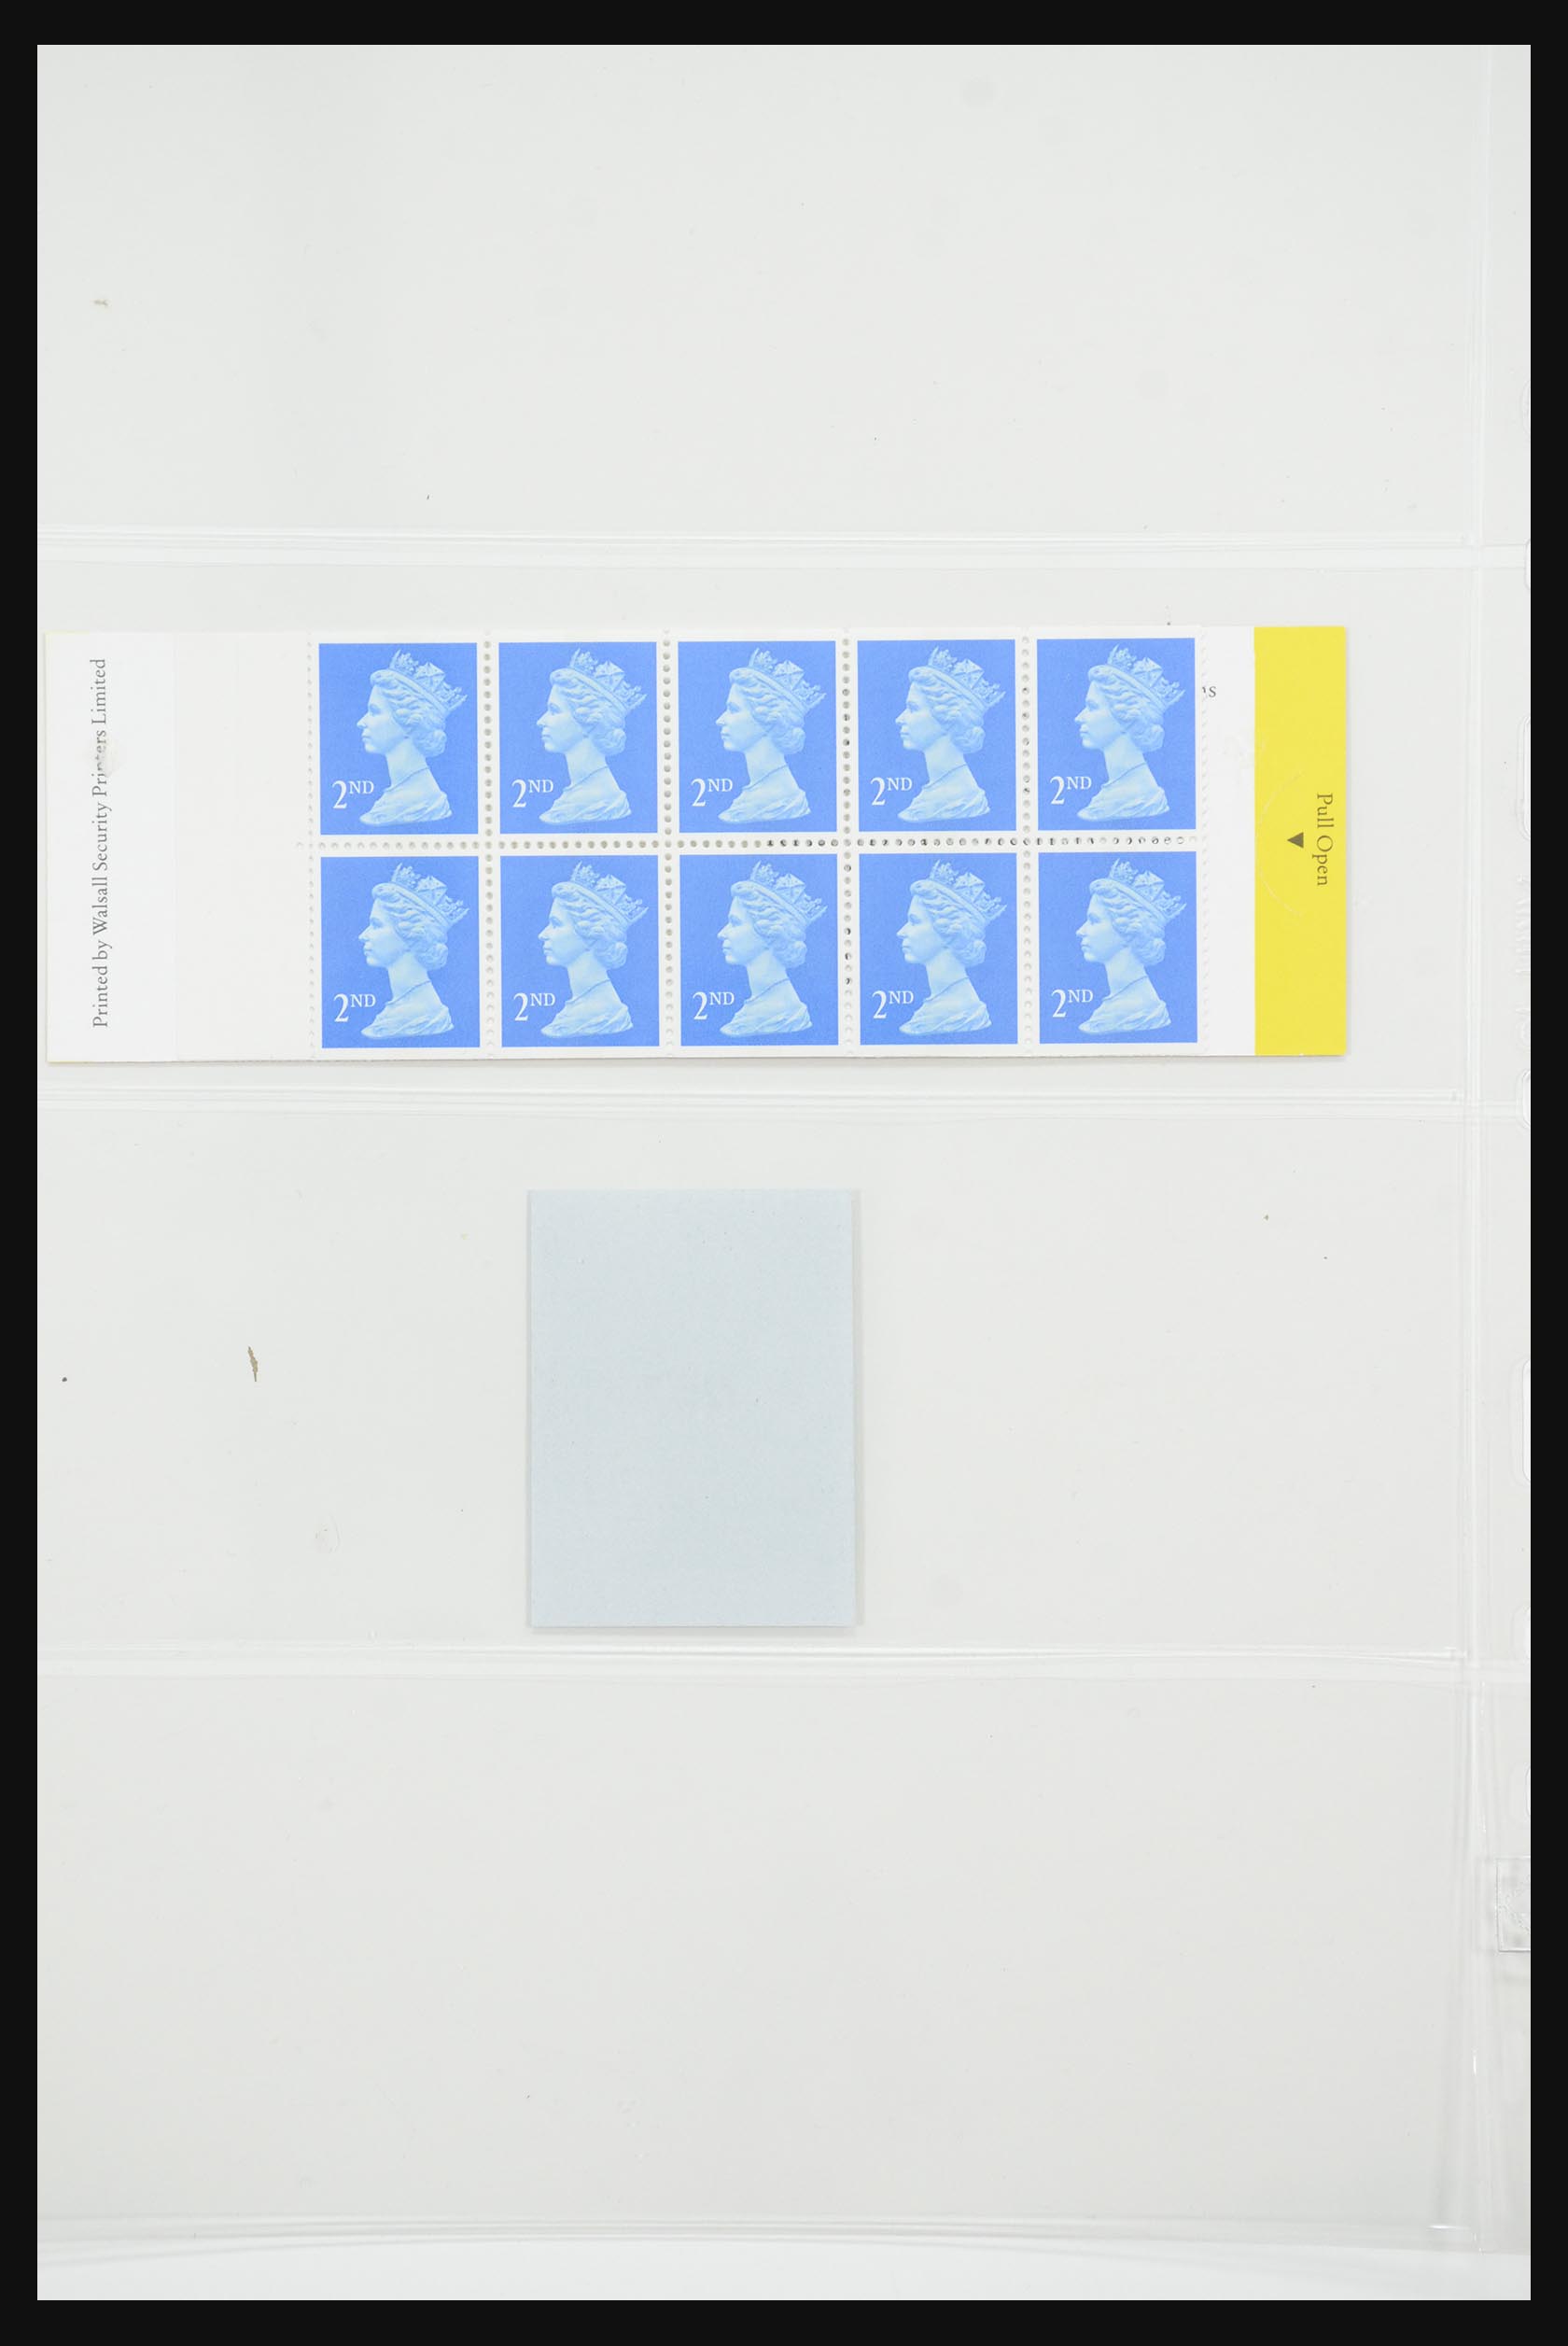 31960 068 - 31960 Great Britain stampbooklets 1989-2000.